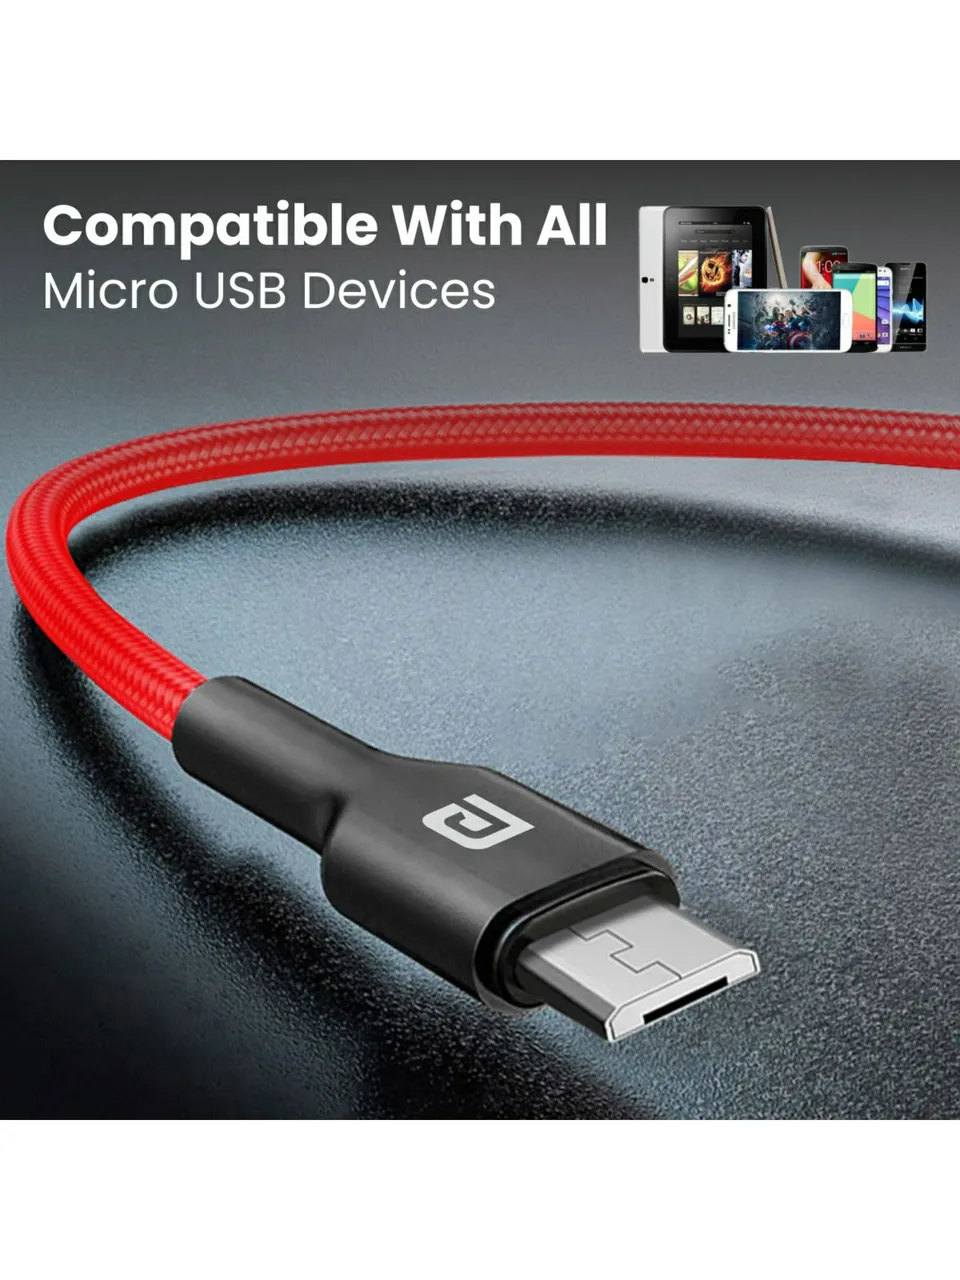 Portronics Konnect B-1M Micro USB Nylon Braided Cable